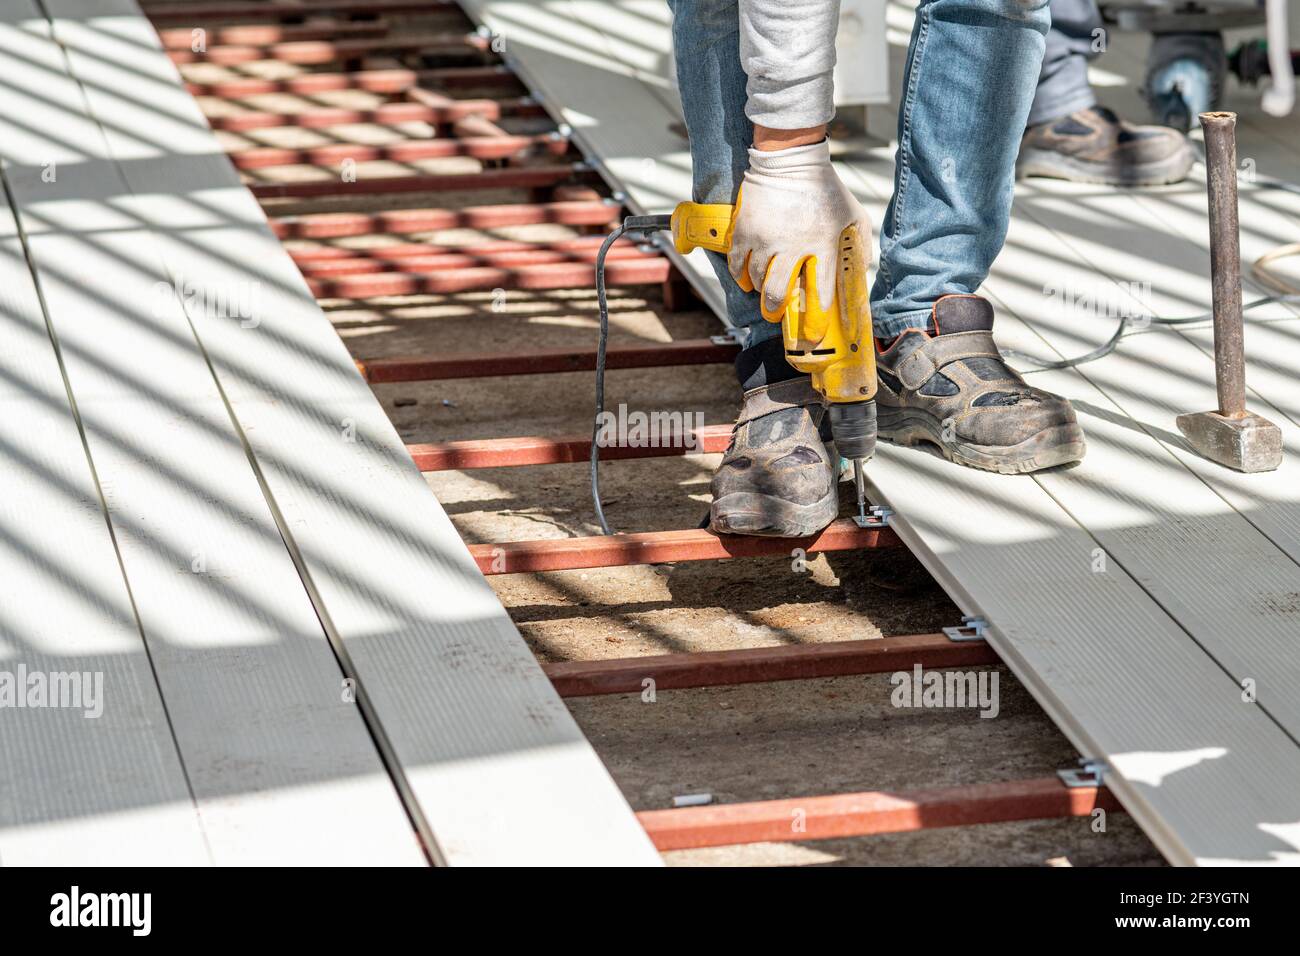 Man assembling composite deck using cordless screwdriver. Stock Photo